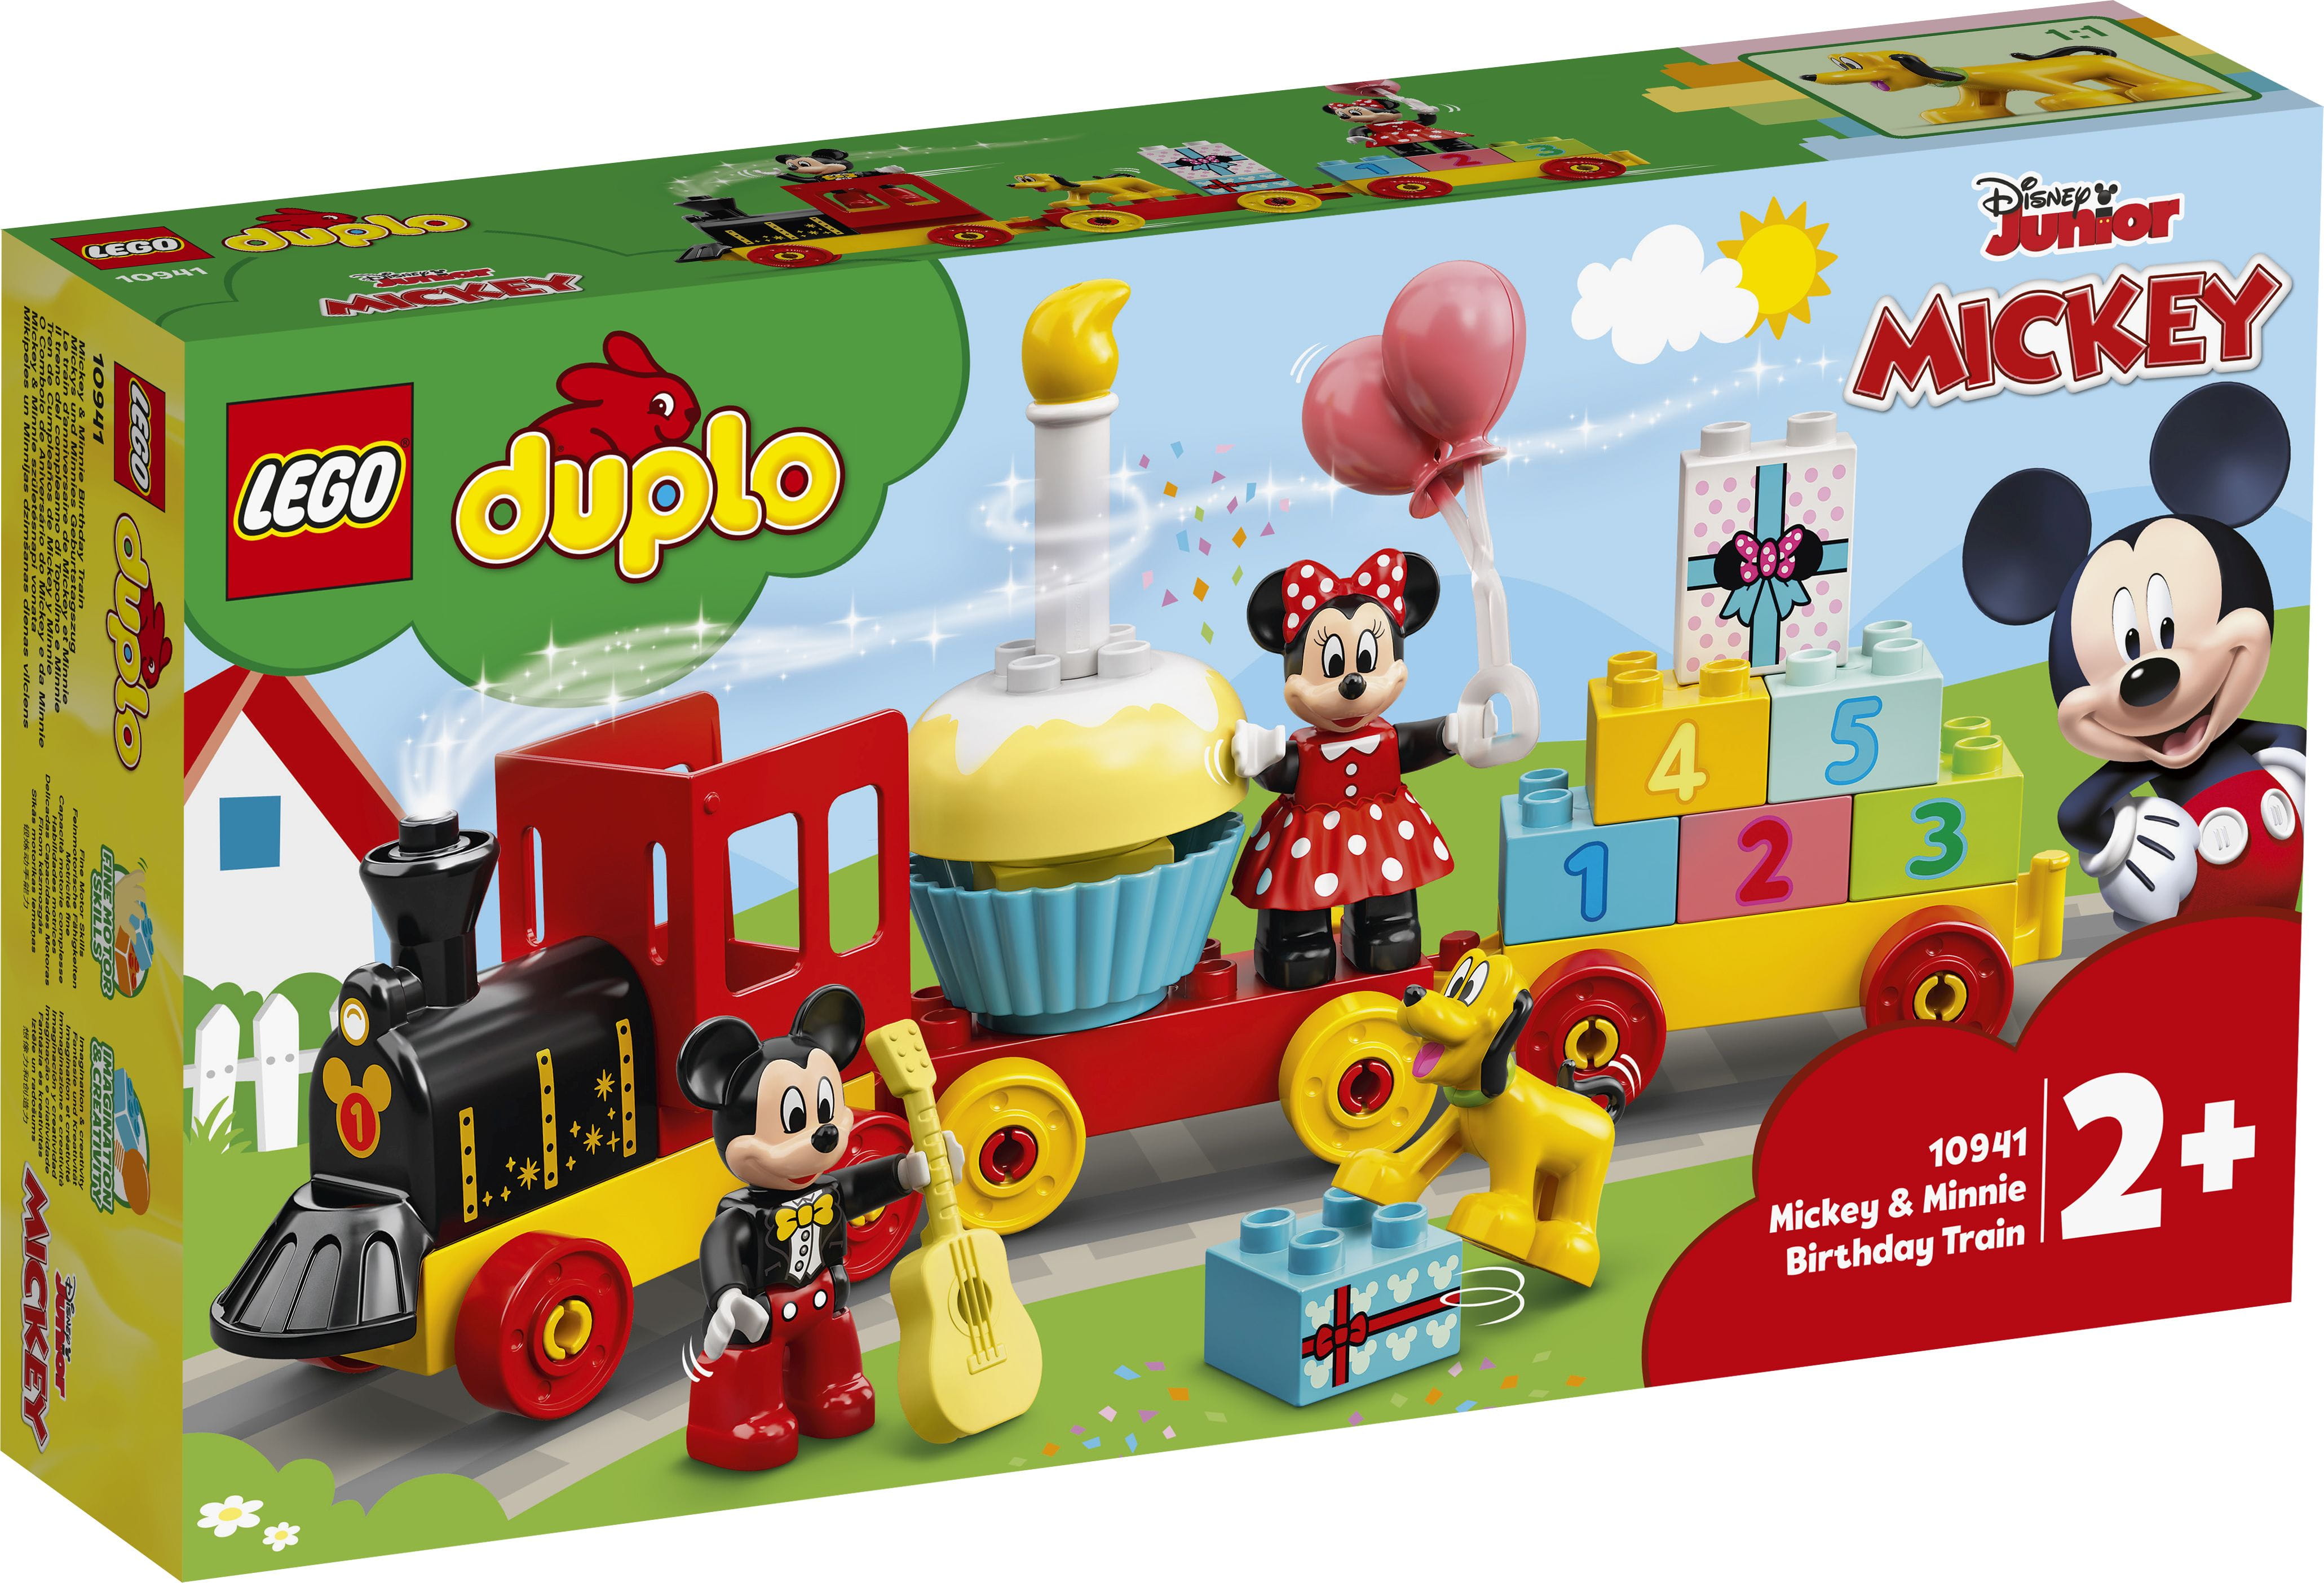 LEGO Duplo Mickys und Minnies Geburtstagszug